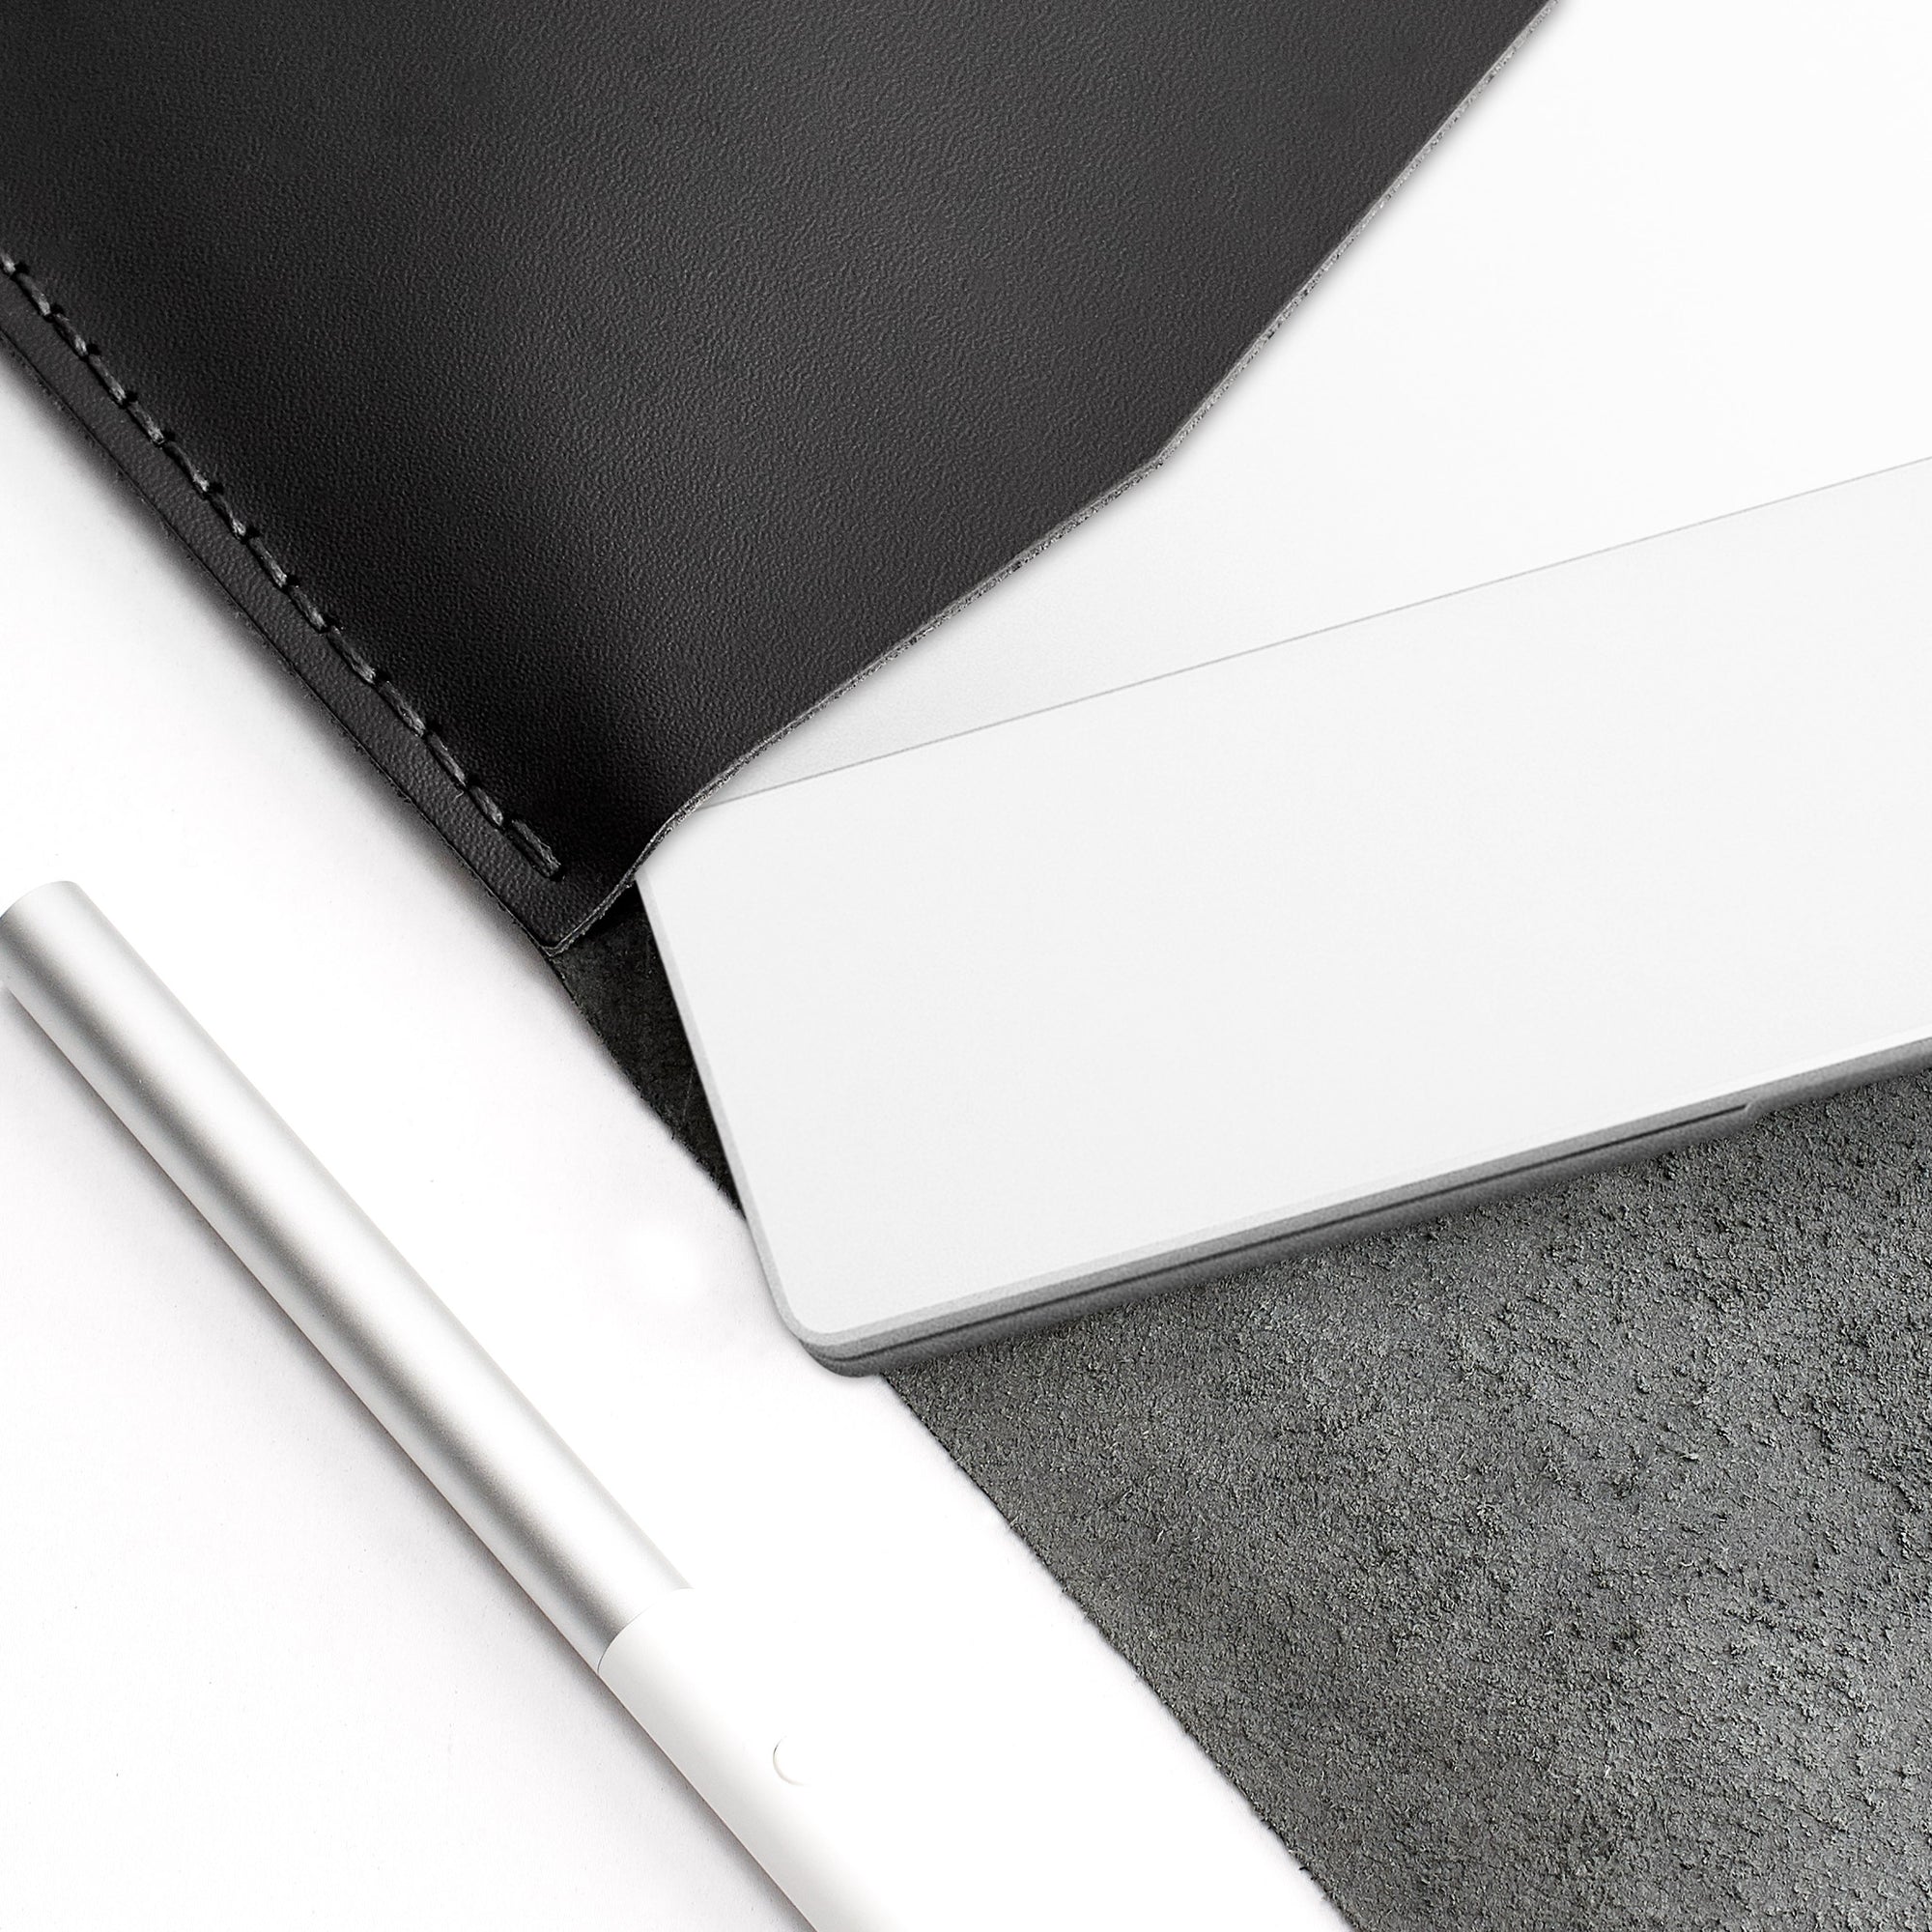 Handstitch detail. ASUS Zenbook Pro Duo Black leather case with pen holder. ASUS laptop mens folio